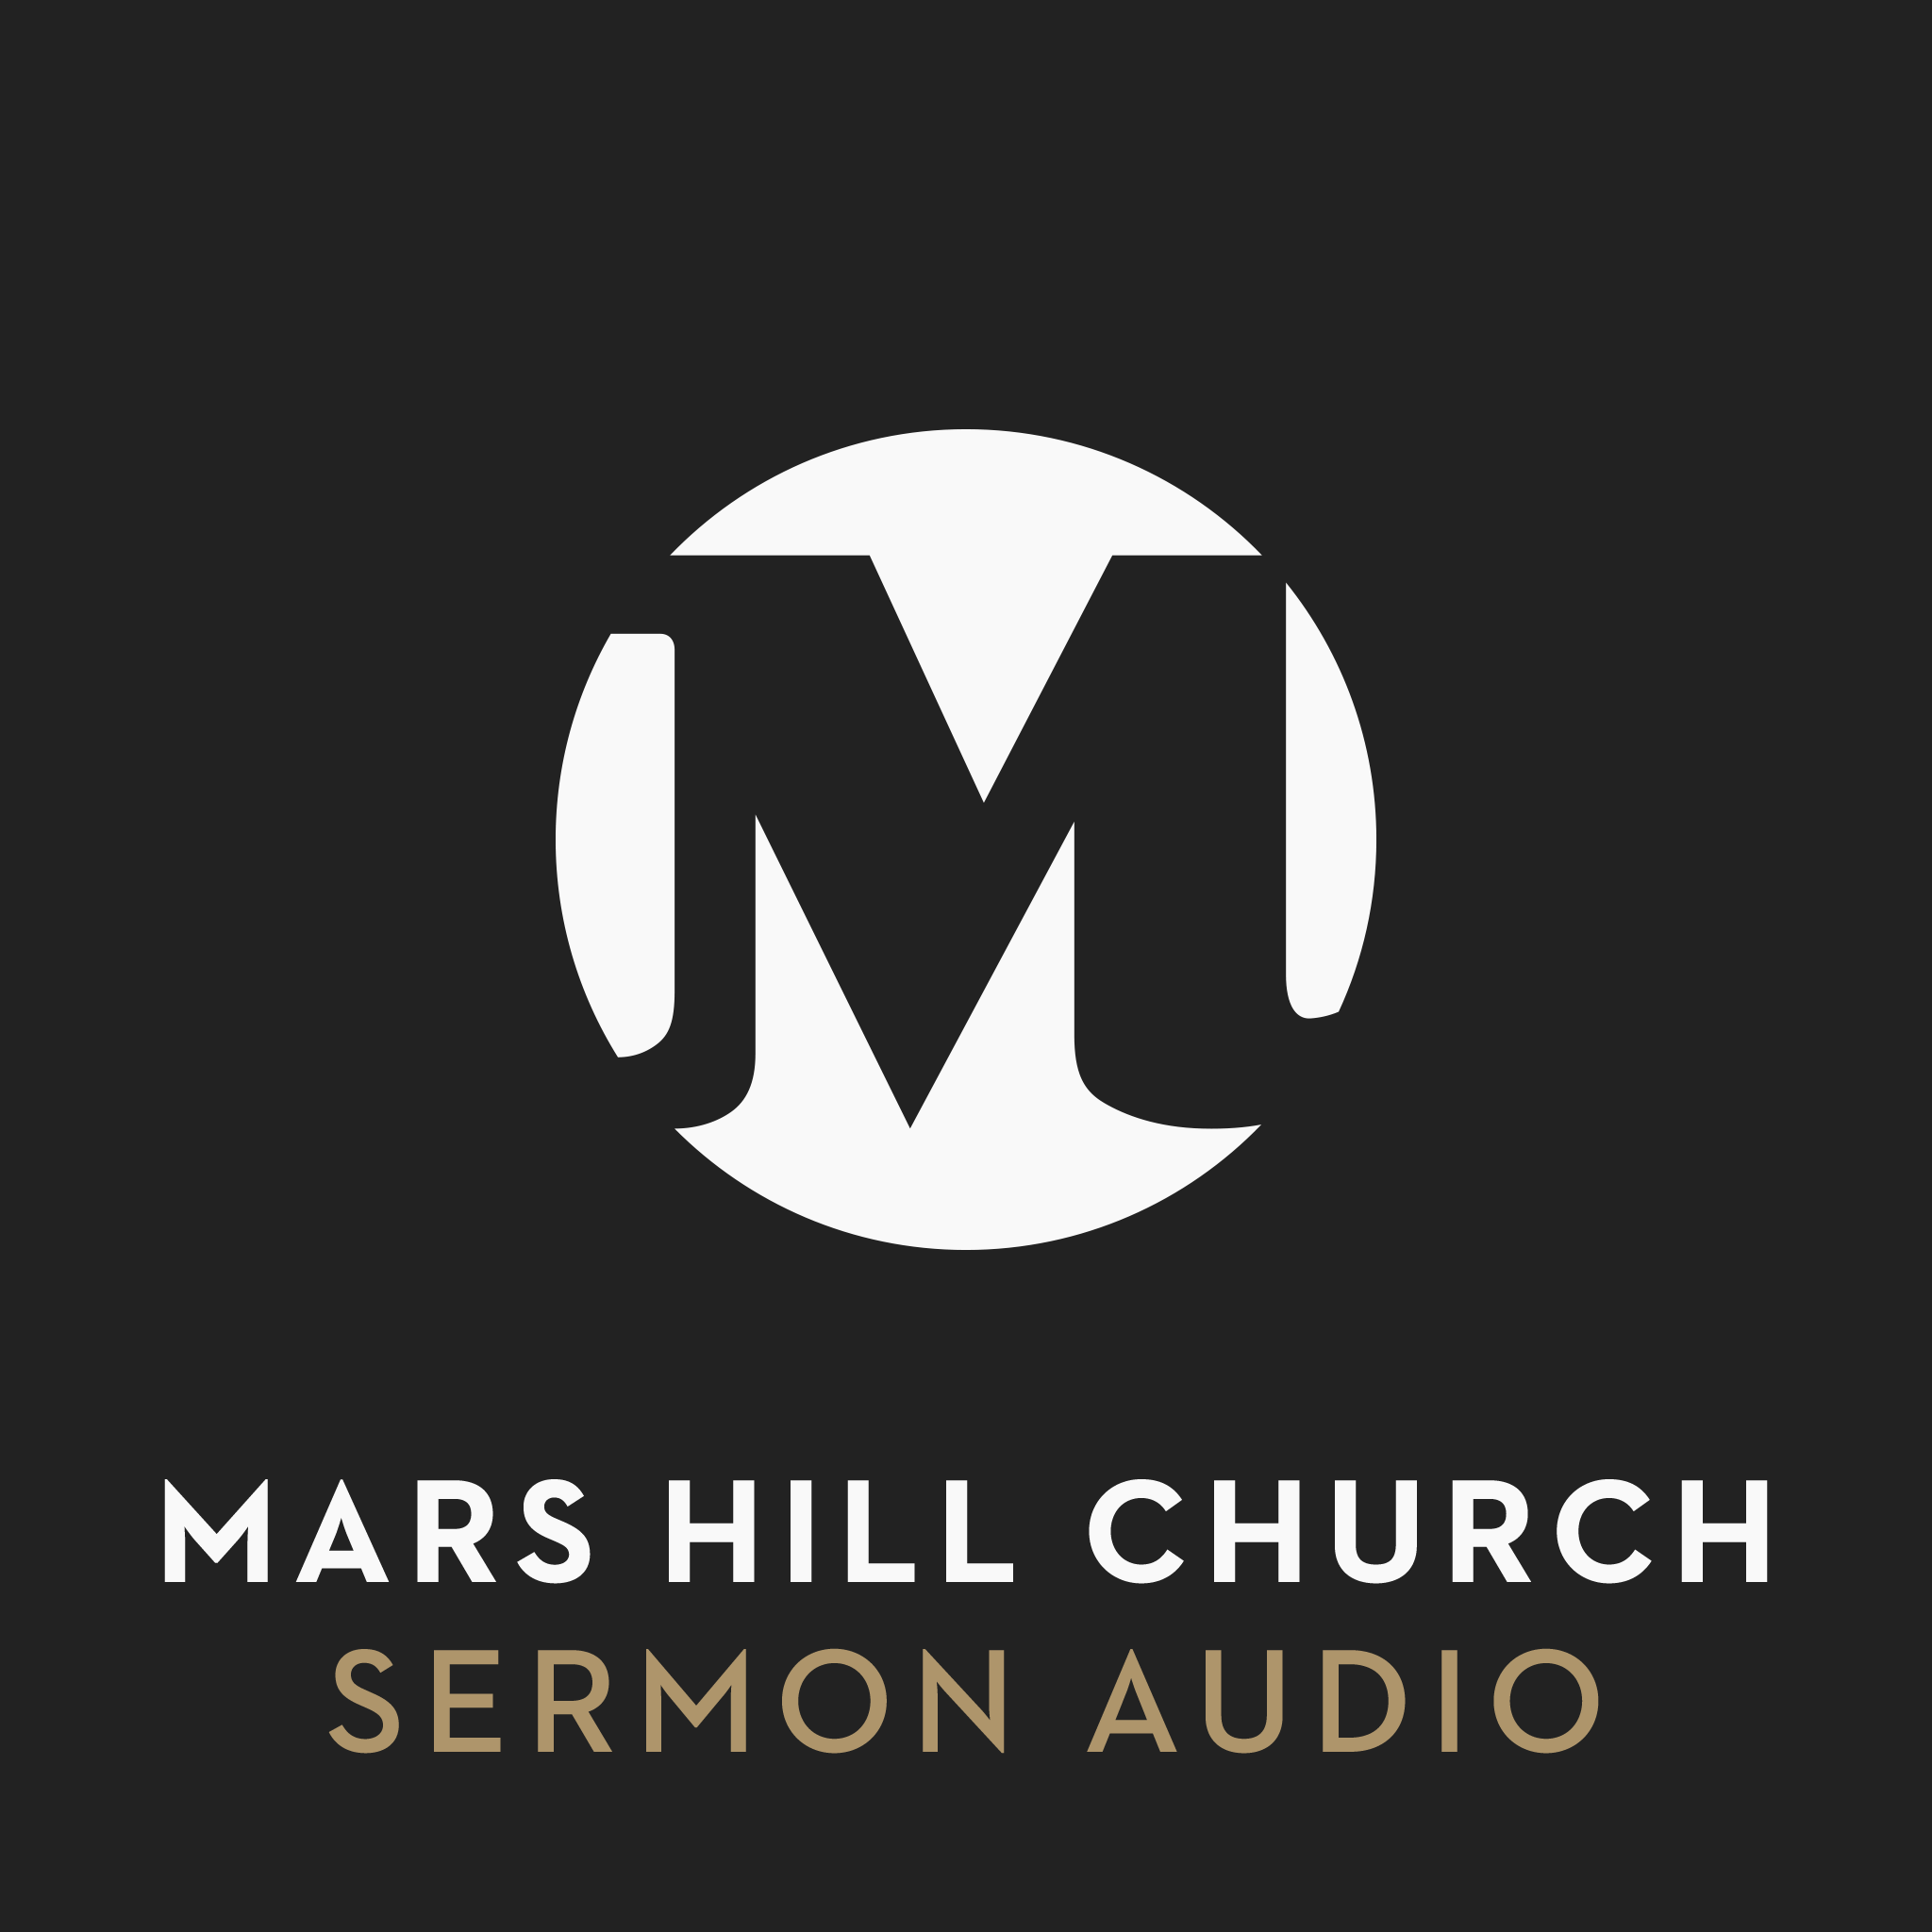 Mh_badge_sermon_audio